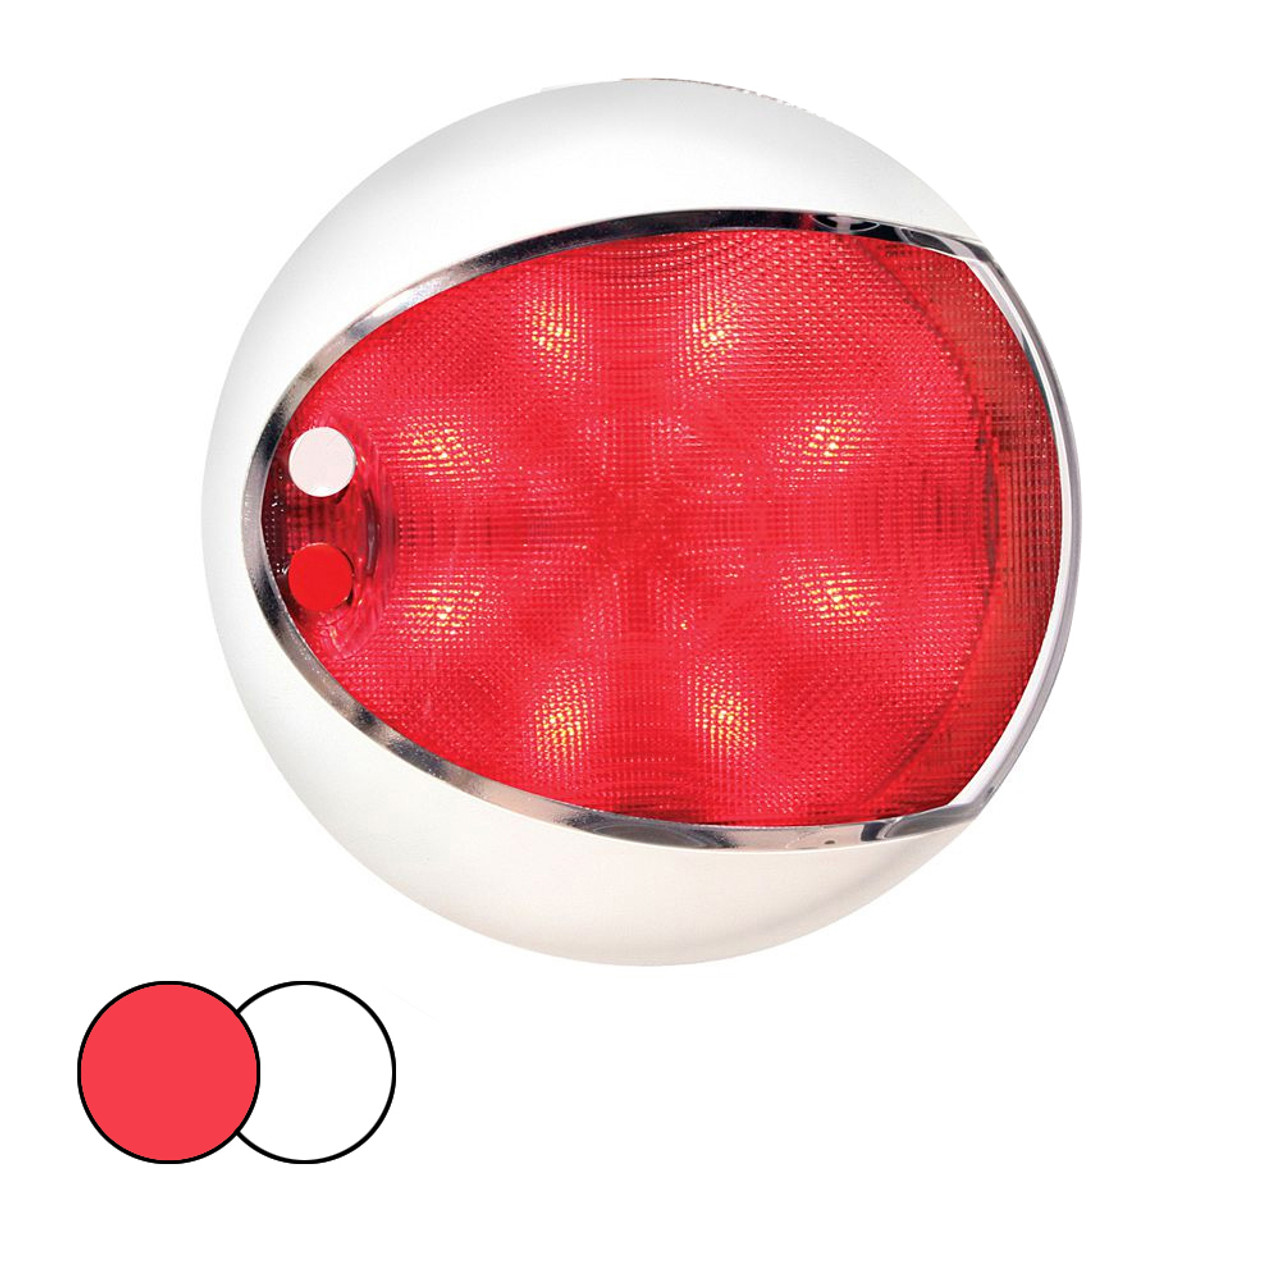 Hella Marine EuroLED 130 Surface Mount Touch Lamp - Red\/White LED - White Housing [959950121]